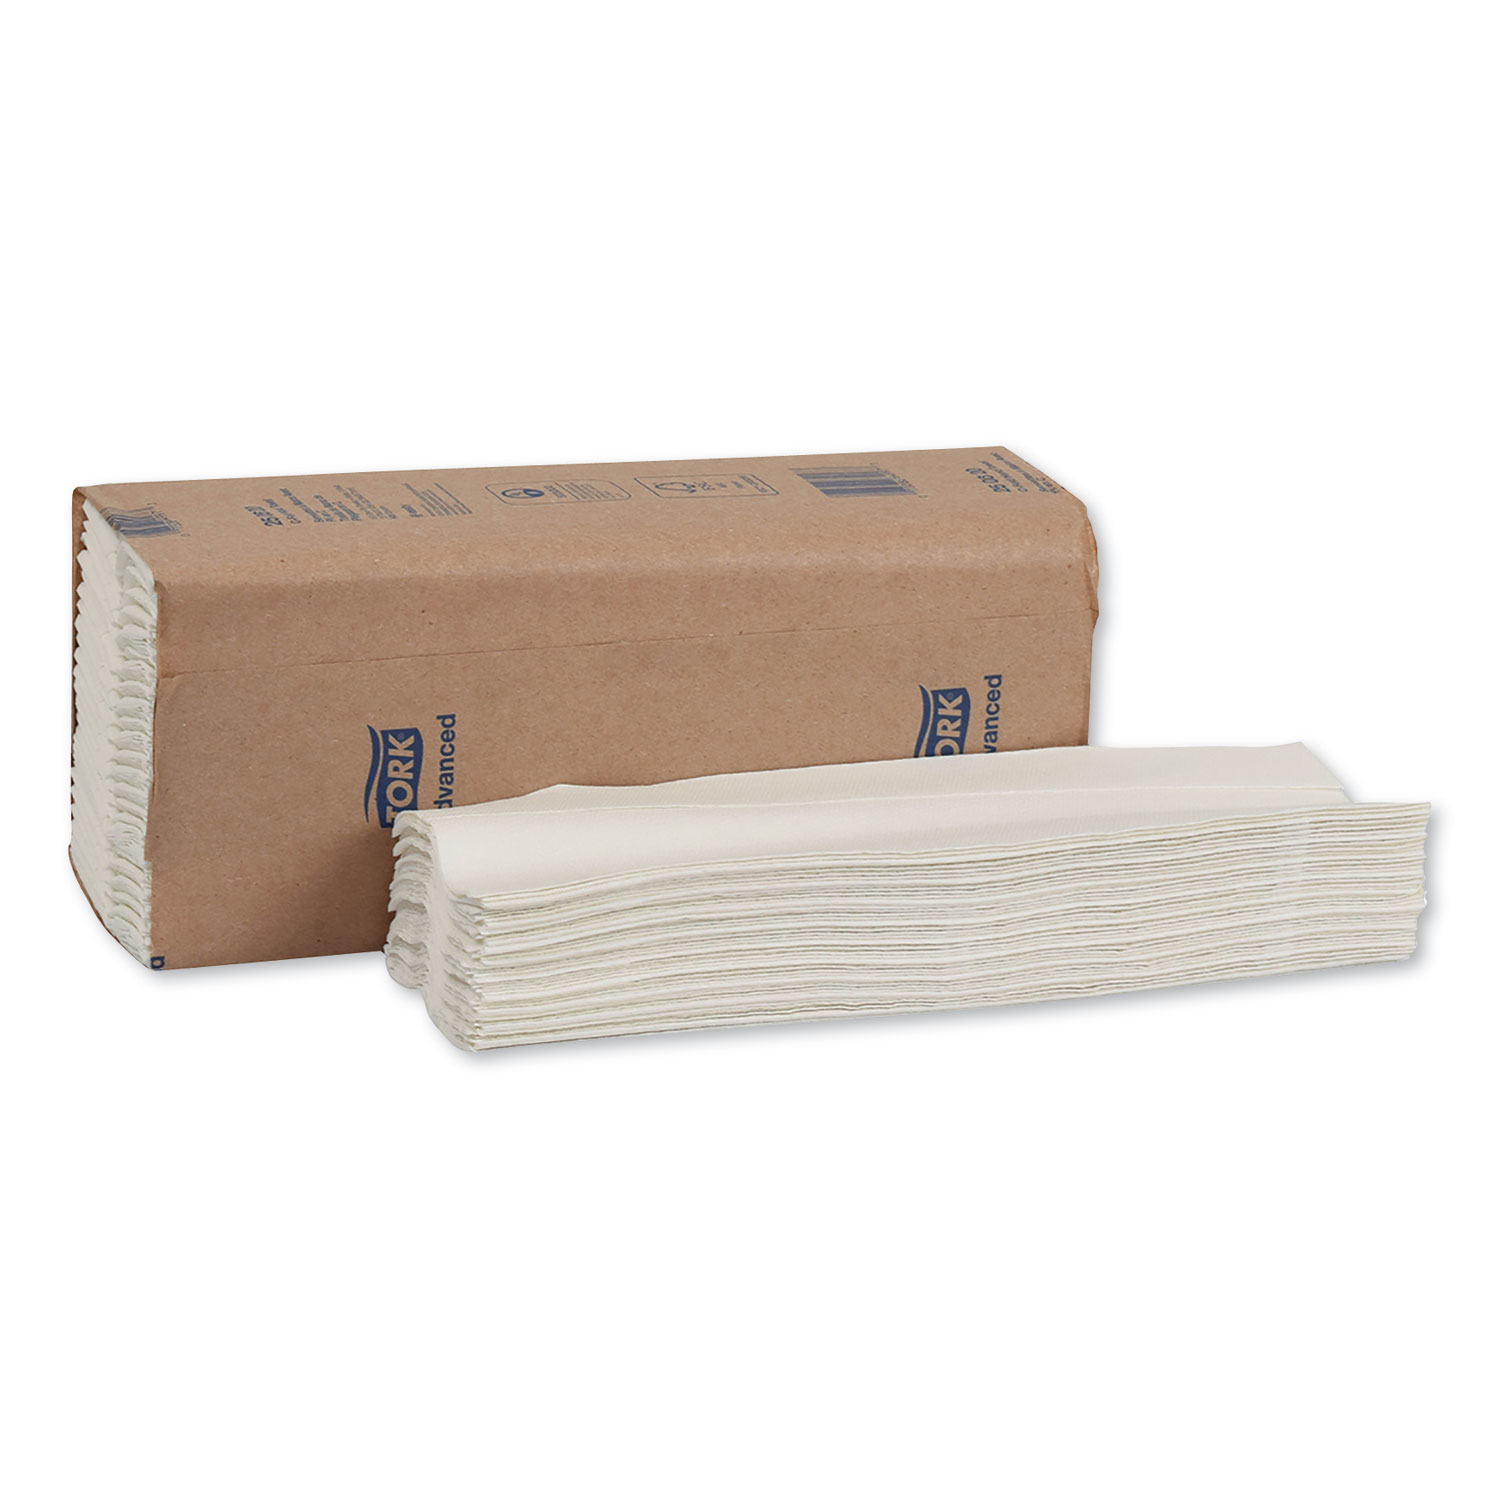  Tork 250620 Advanced C-Fold Hand Towel, 1-Ply, 10.13 x 12.75, White, 150/Pack, 16 Packs/Carton (TRK250620) 